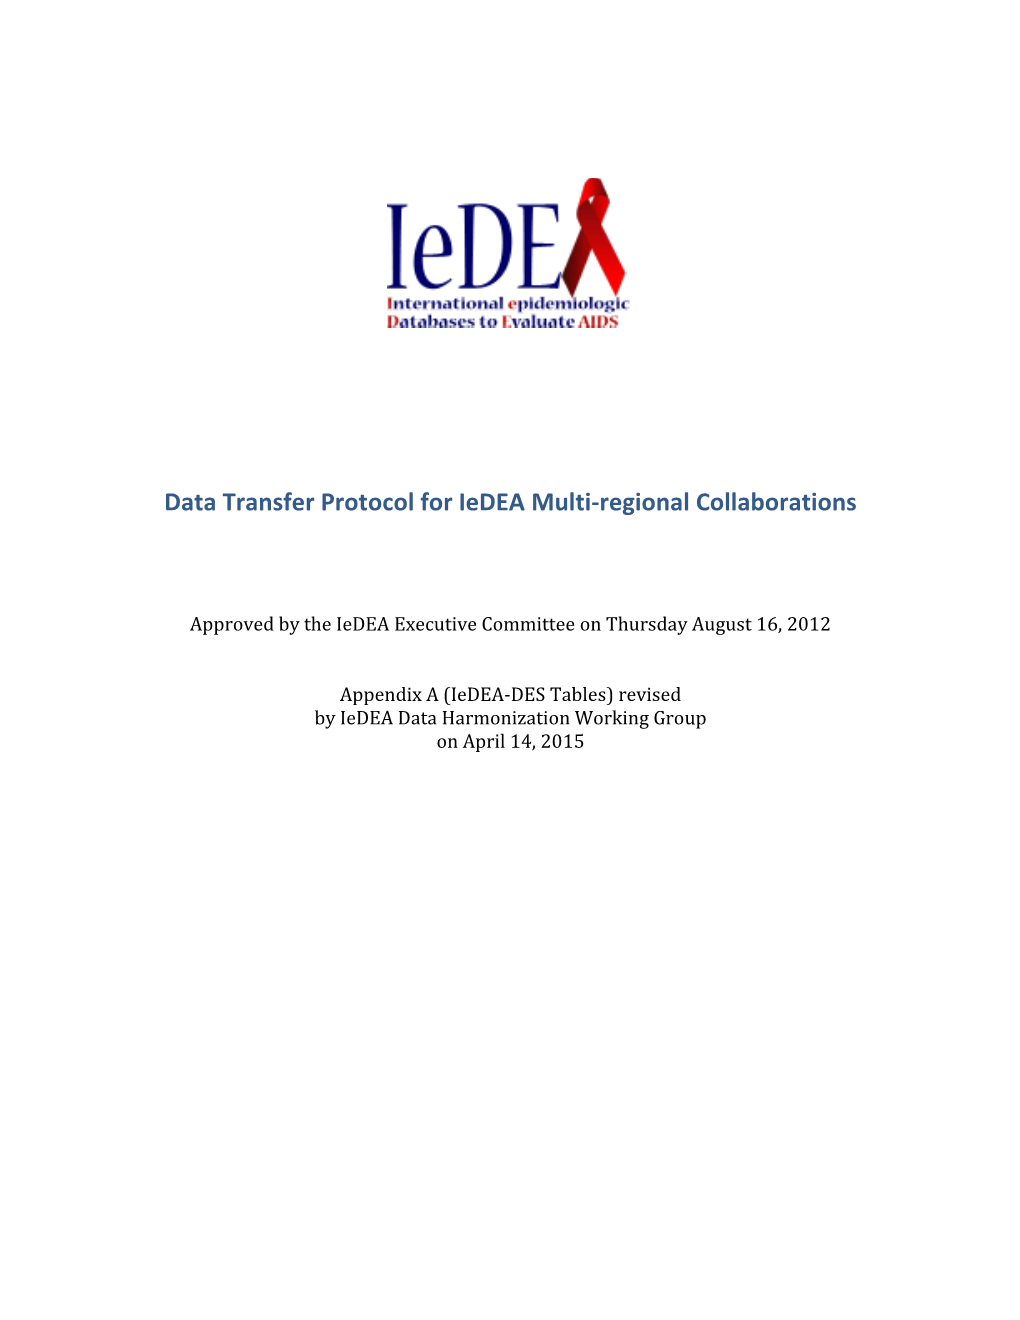 Data Transfer Protocol for Iedea Multi-Regional Collaborations